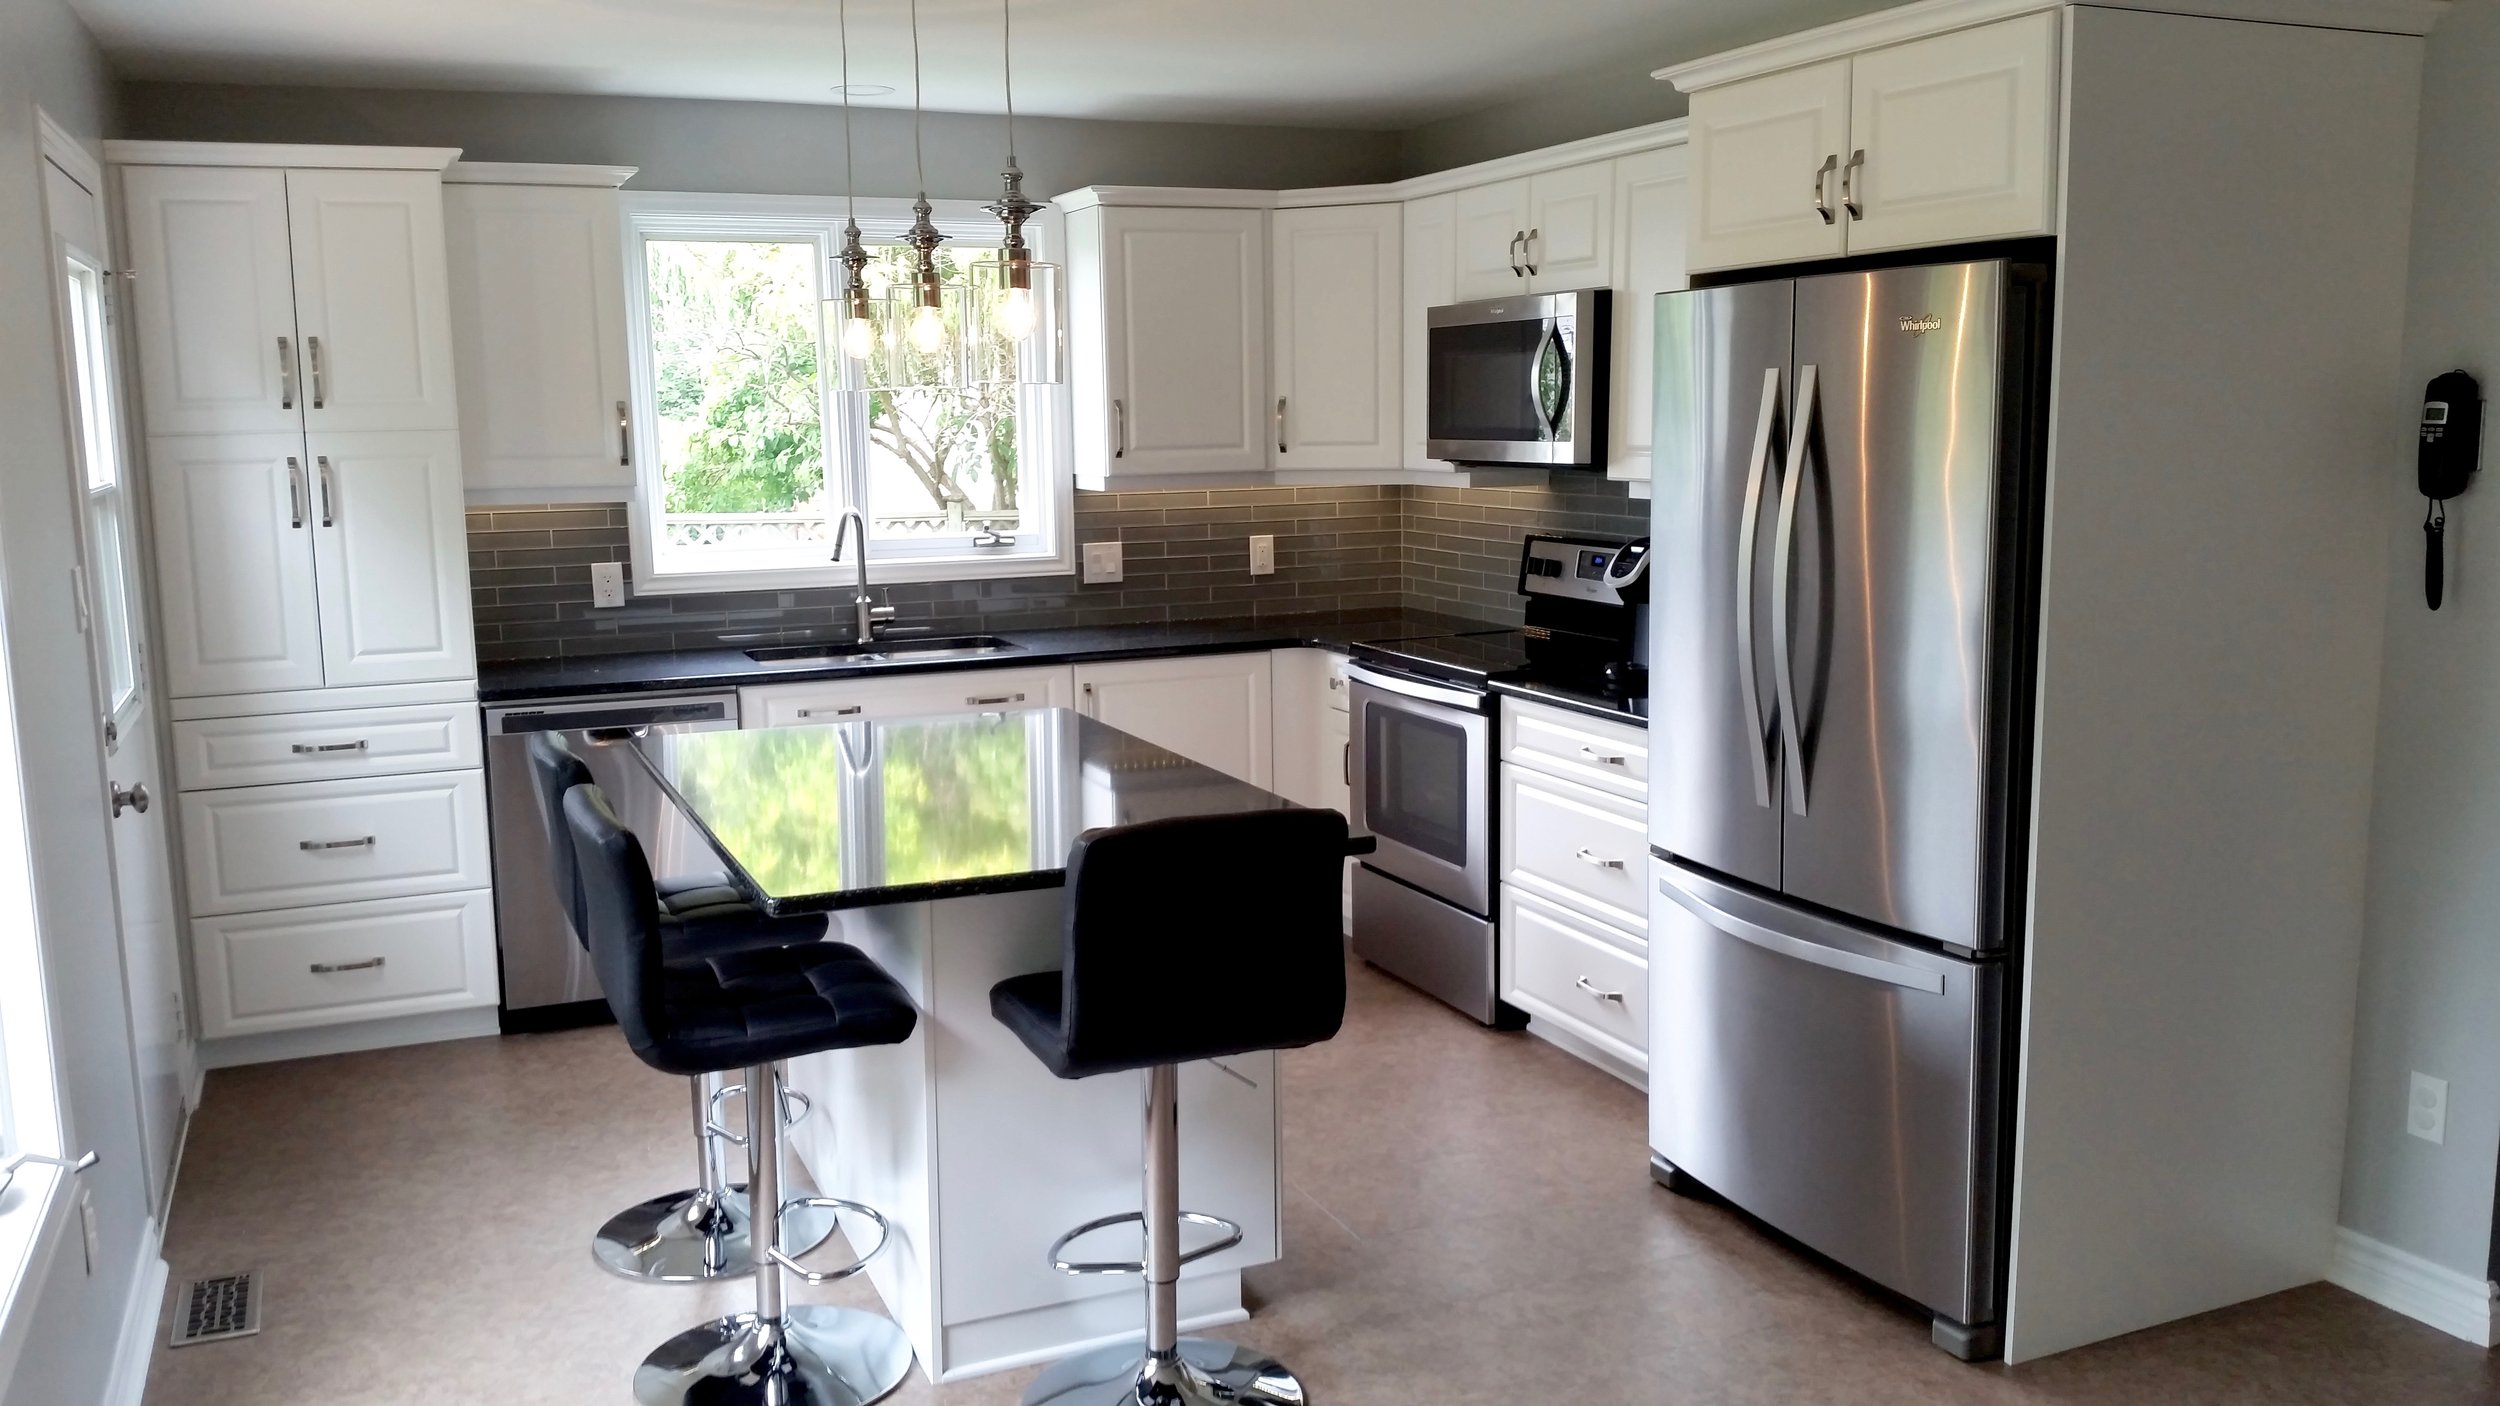 Complete kitchen remodel including floor, cabinets, countertops, and backsplash